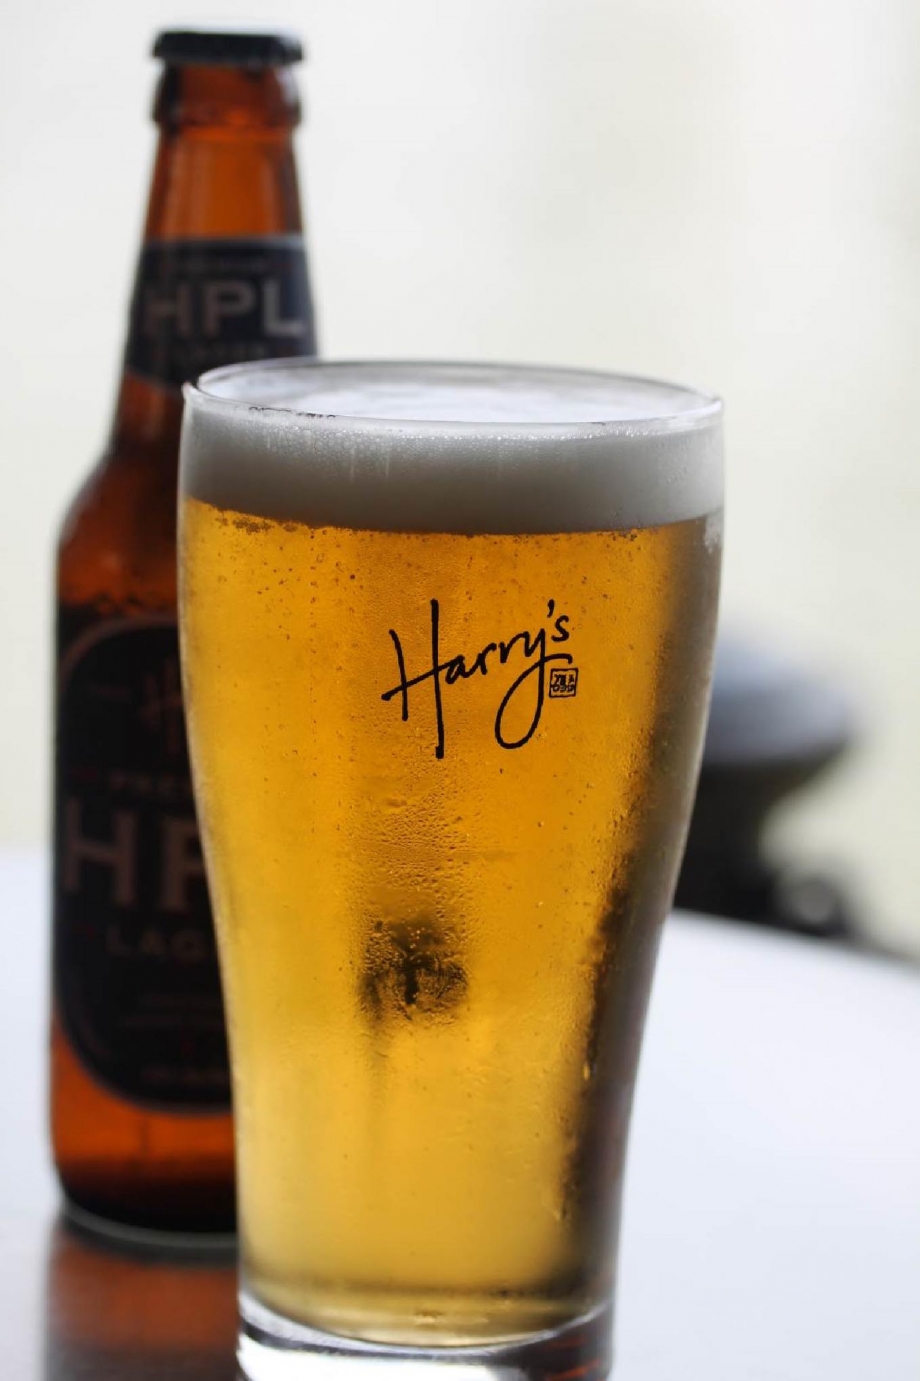 Harry's - Harry's IPA (Indian Pale Ale) - AspirantSG